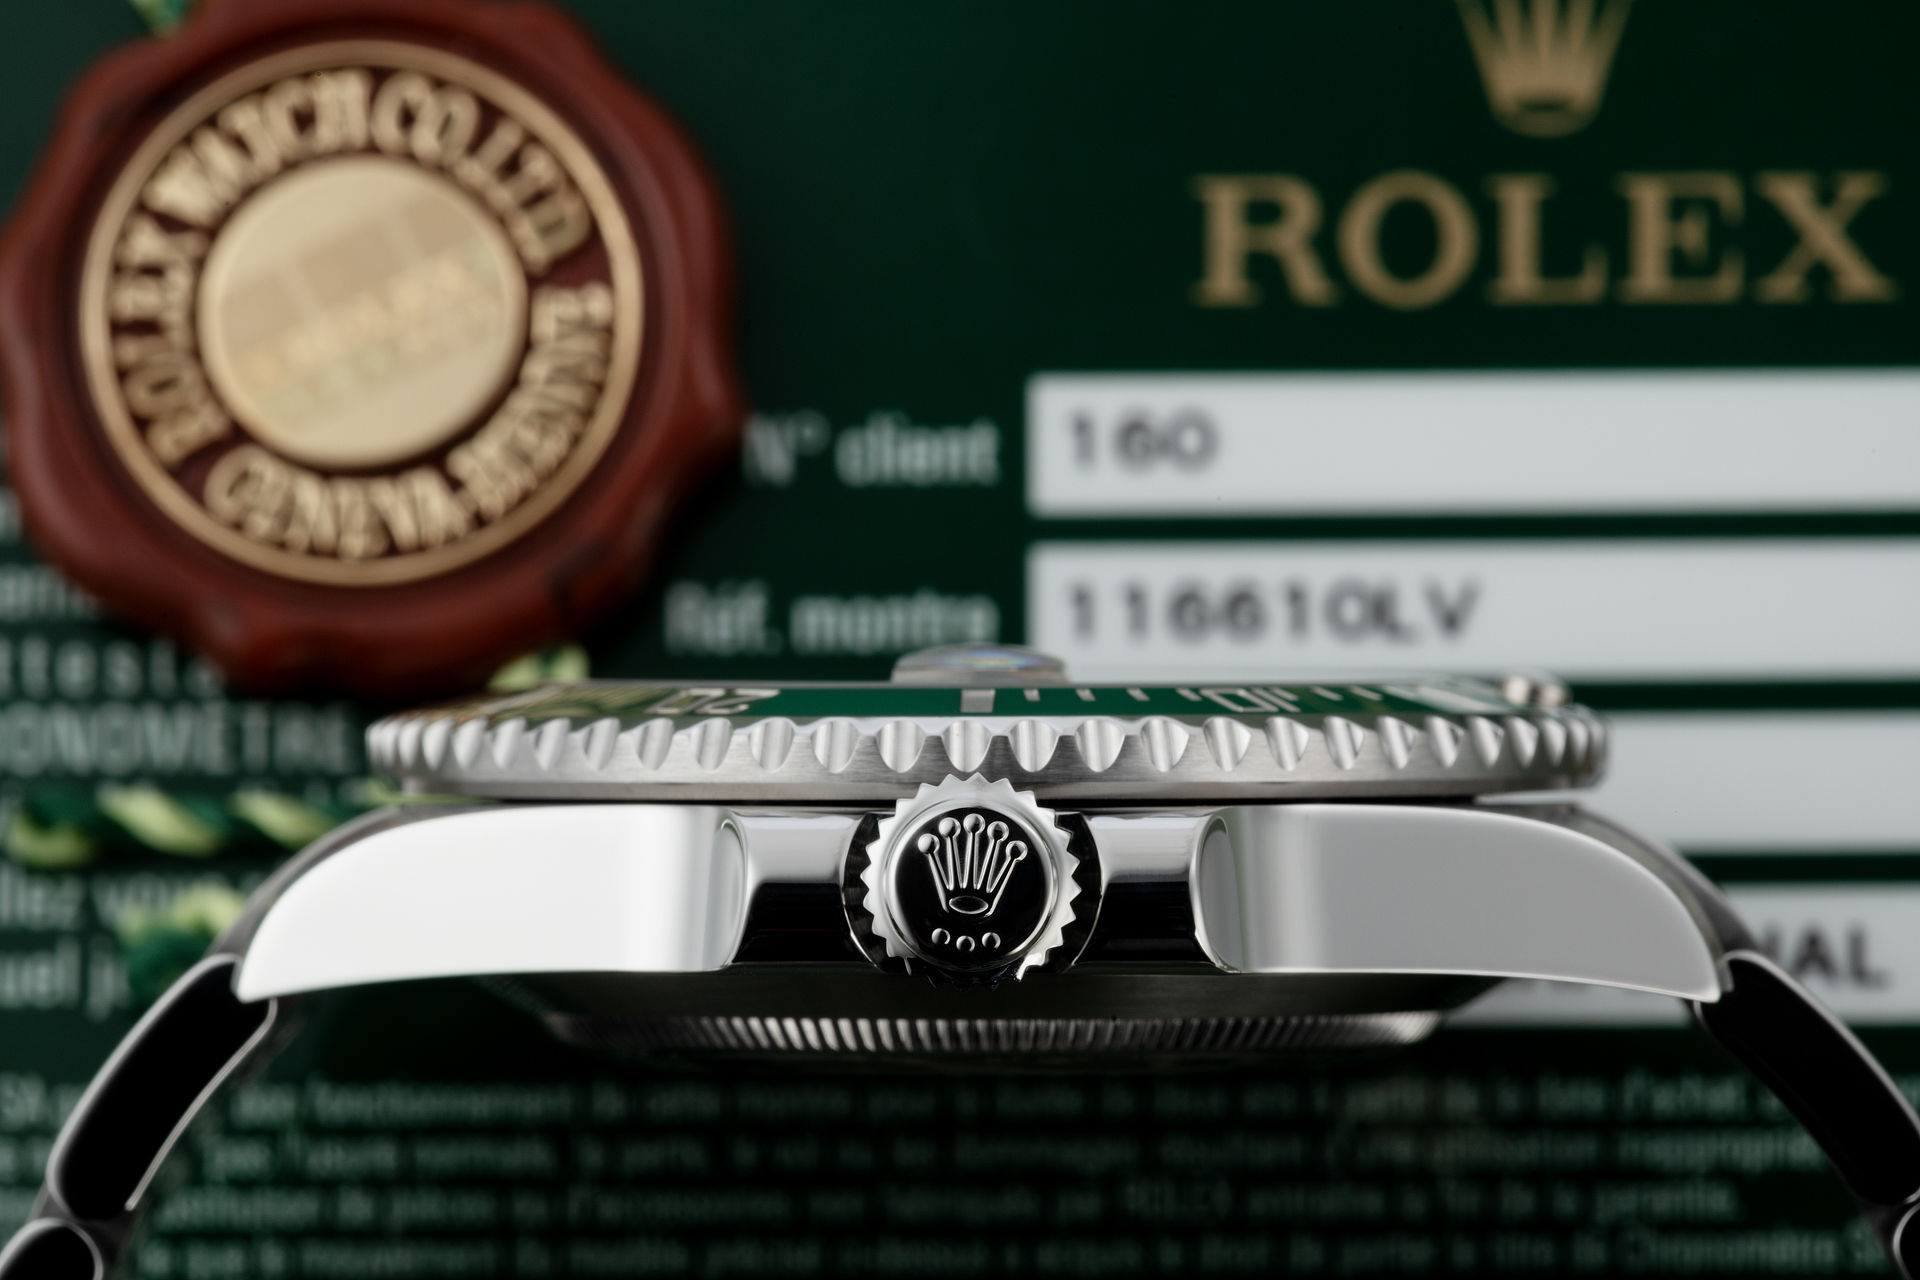 ref 116610LV | 'Hulk' Box & Certificate | Rolex Submariner Date